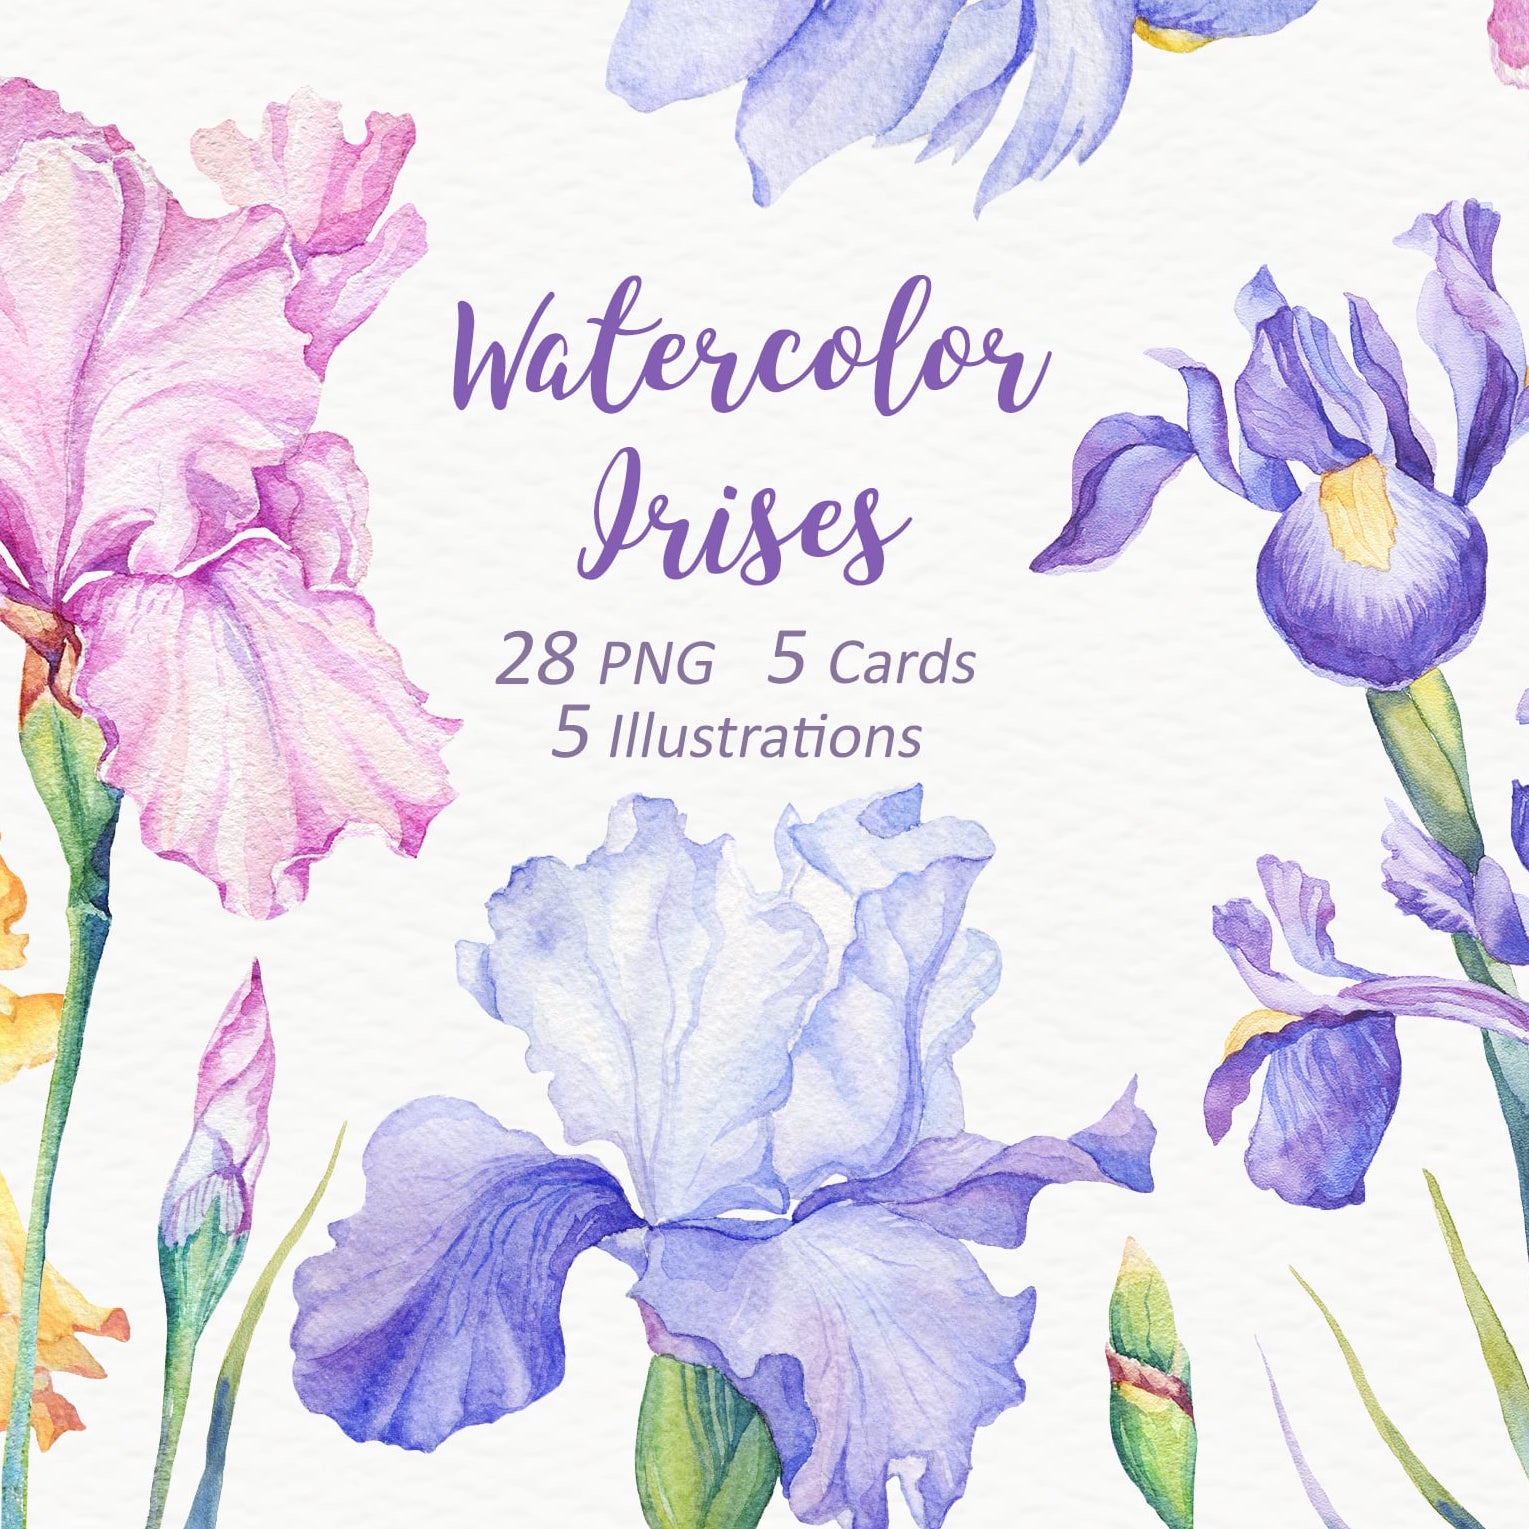 Watercolor Irises cover image.